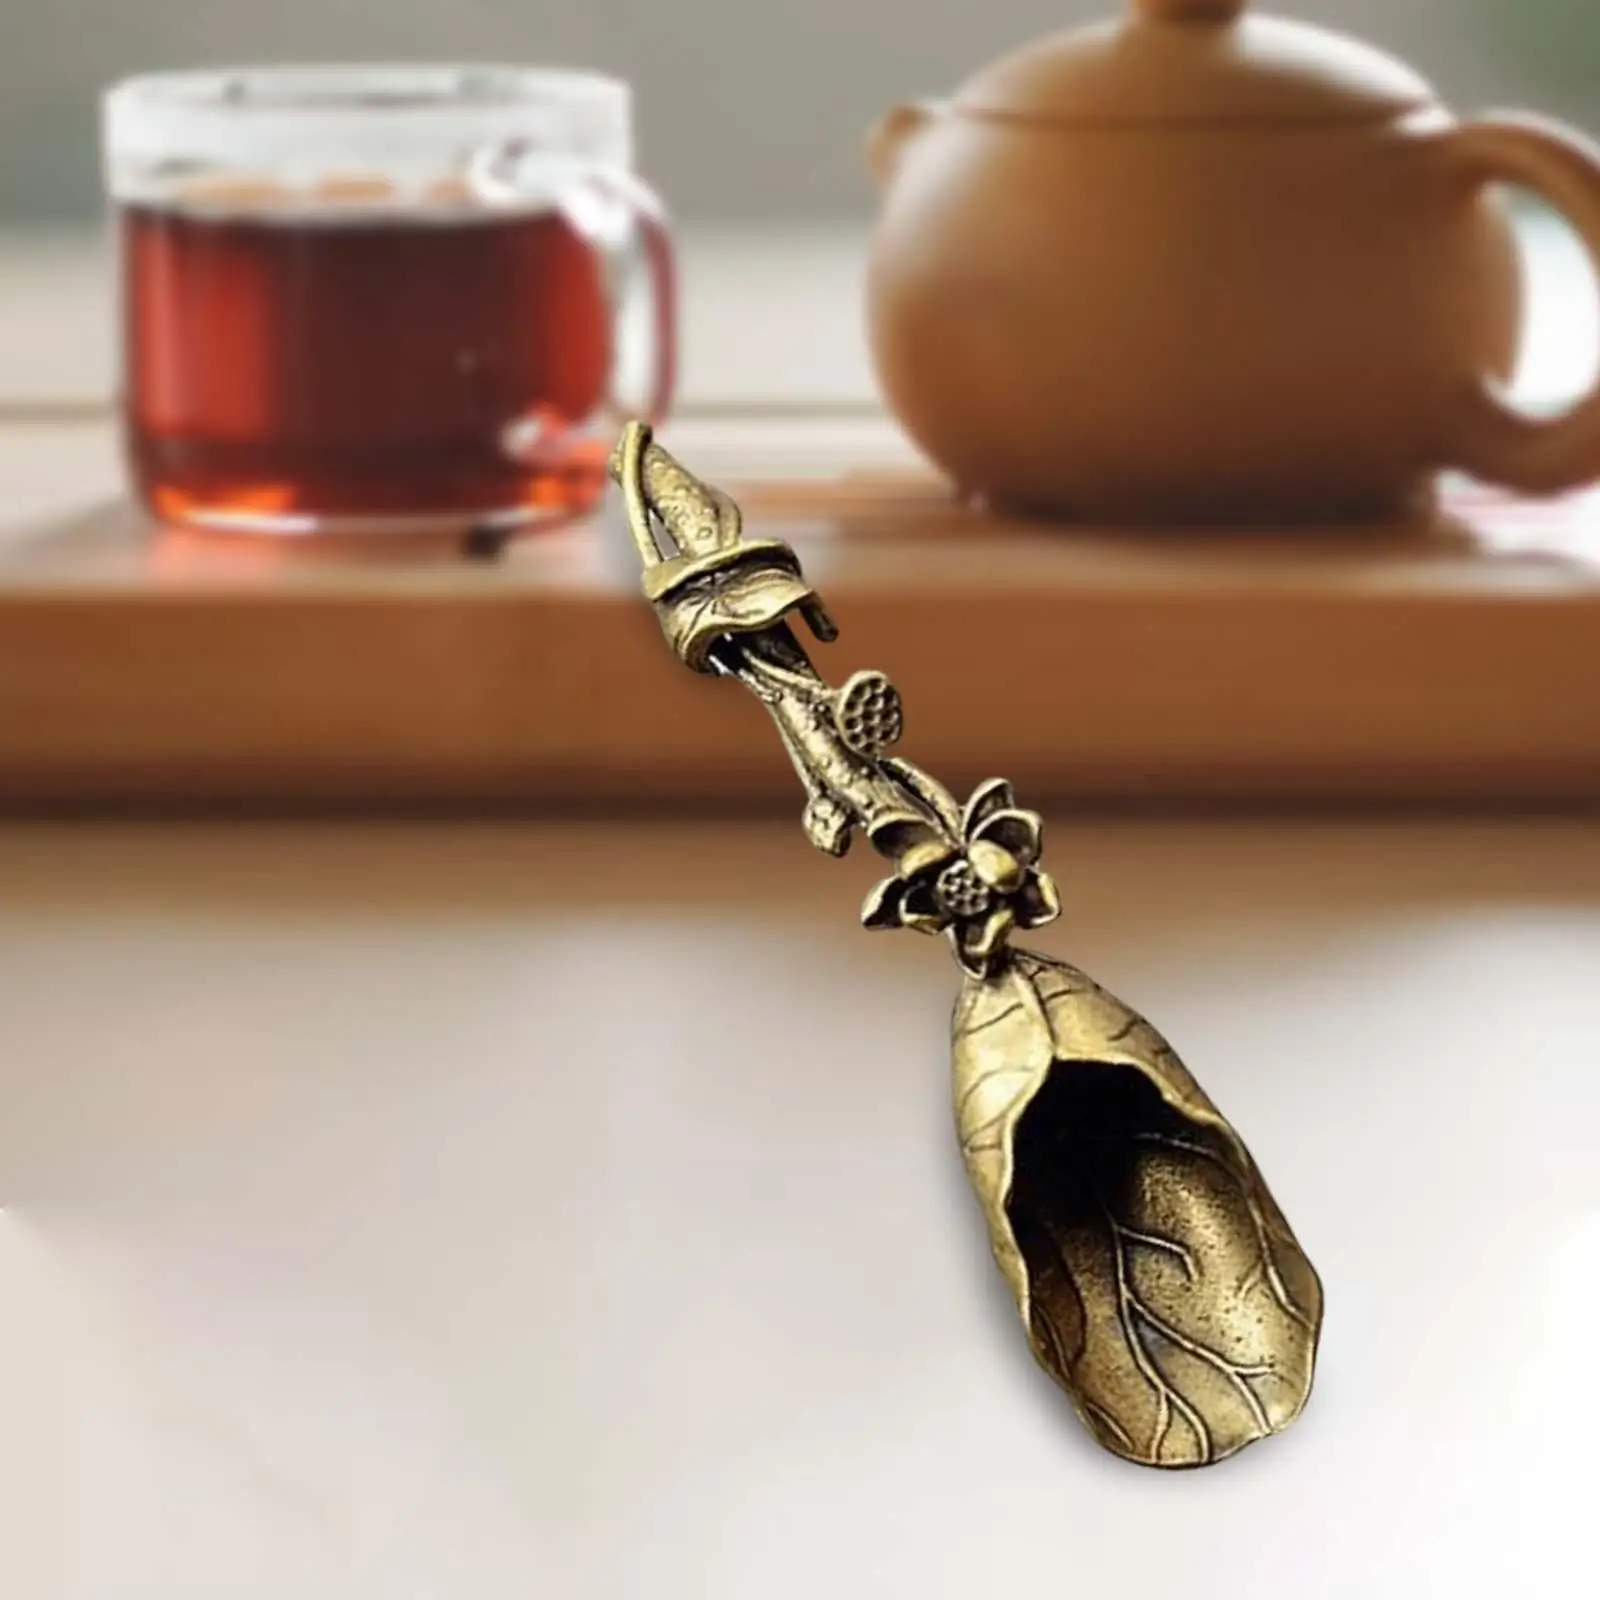 Lotus Shape Teaspoon Chinese Tea Ceremony Brass Vintage Supplies Delicate